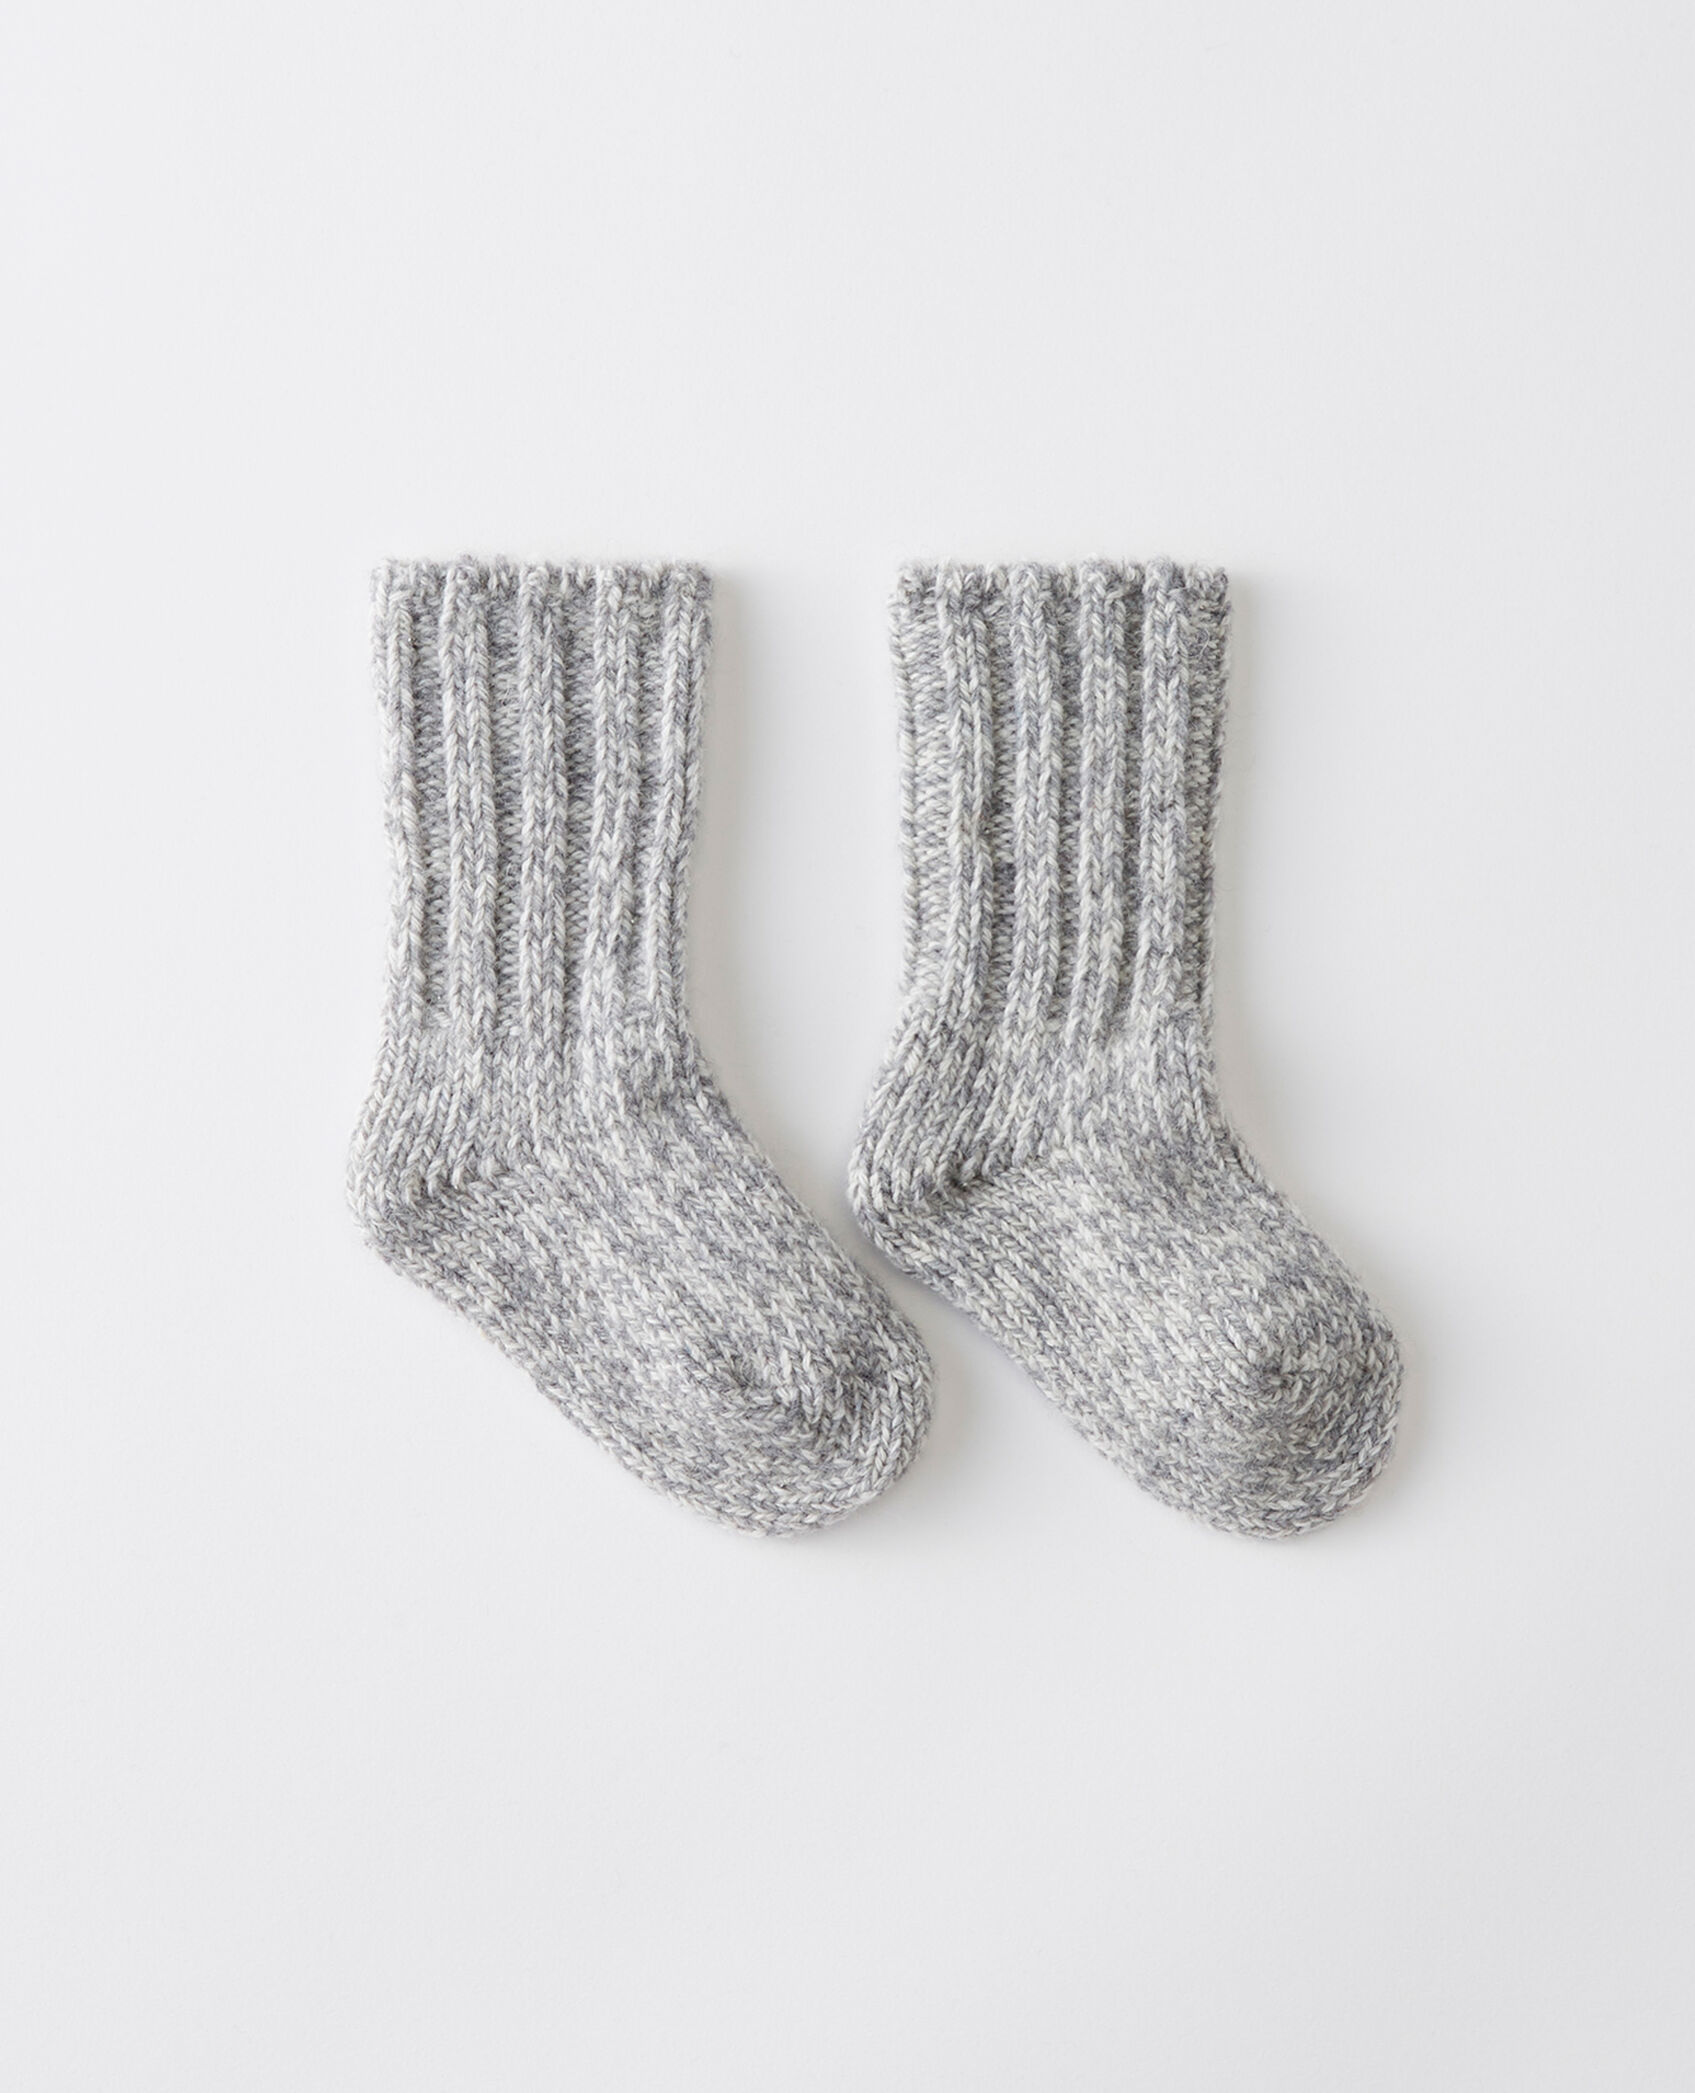 Cozy Woolly Camp Socks